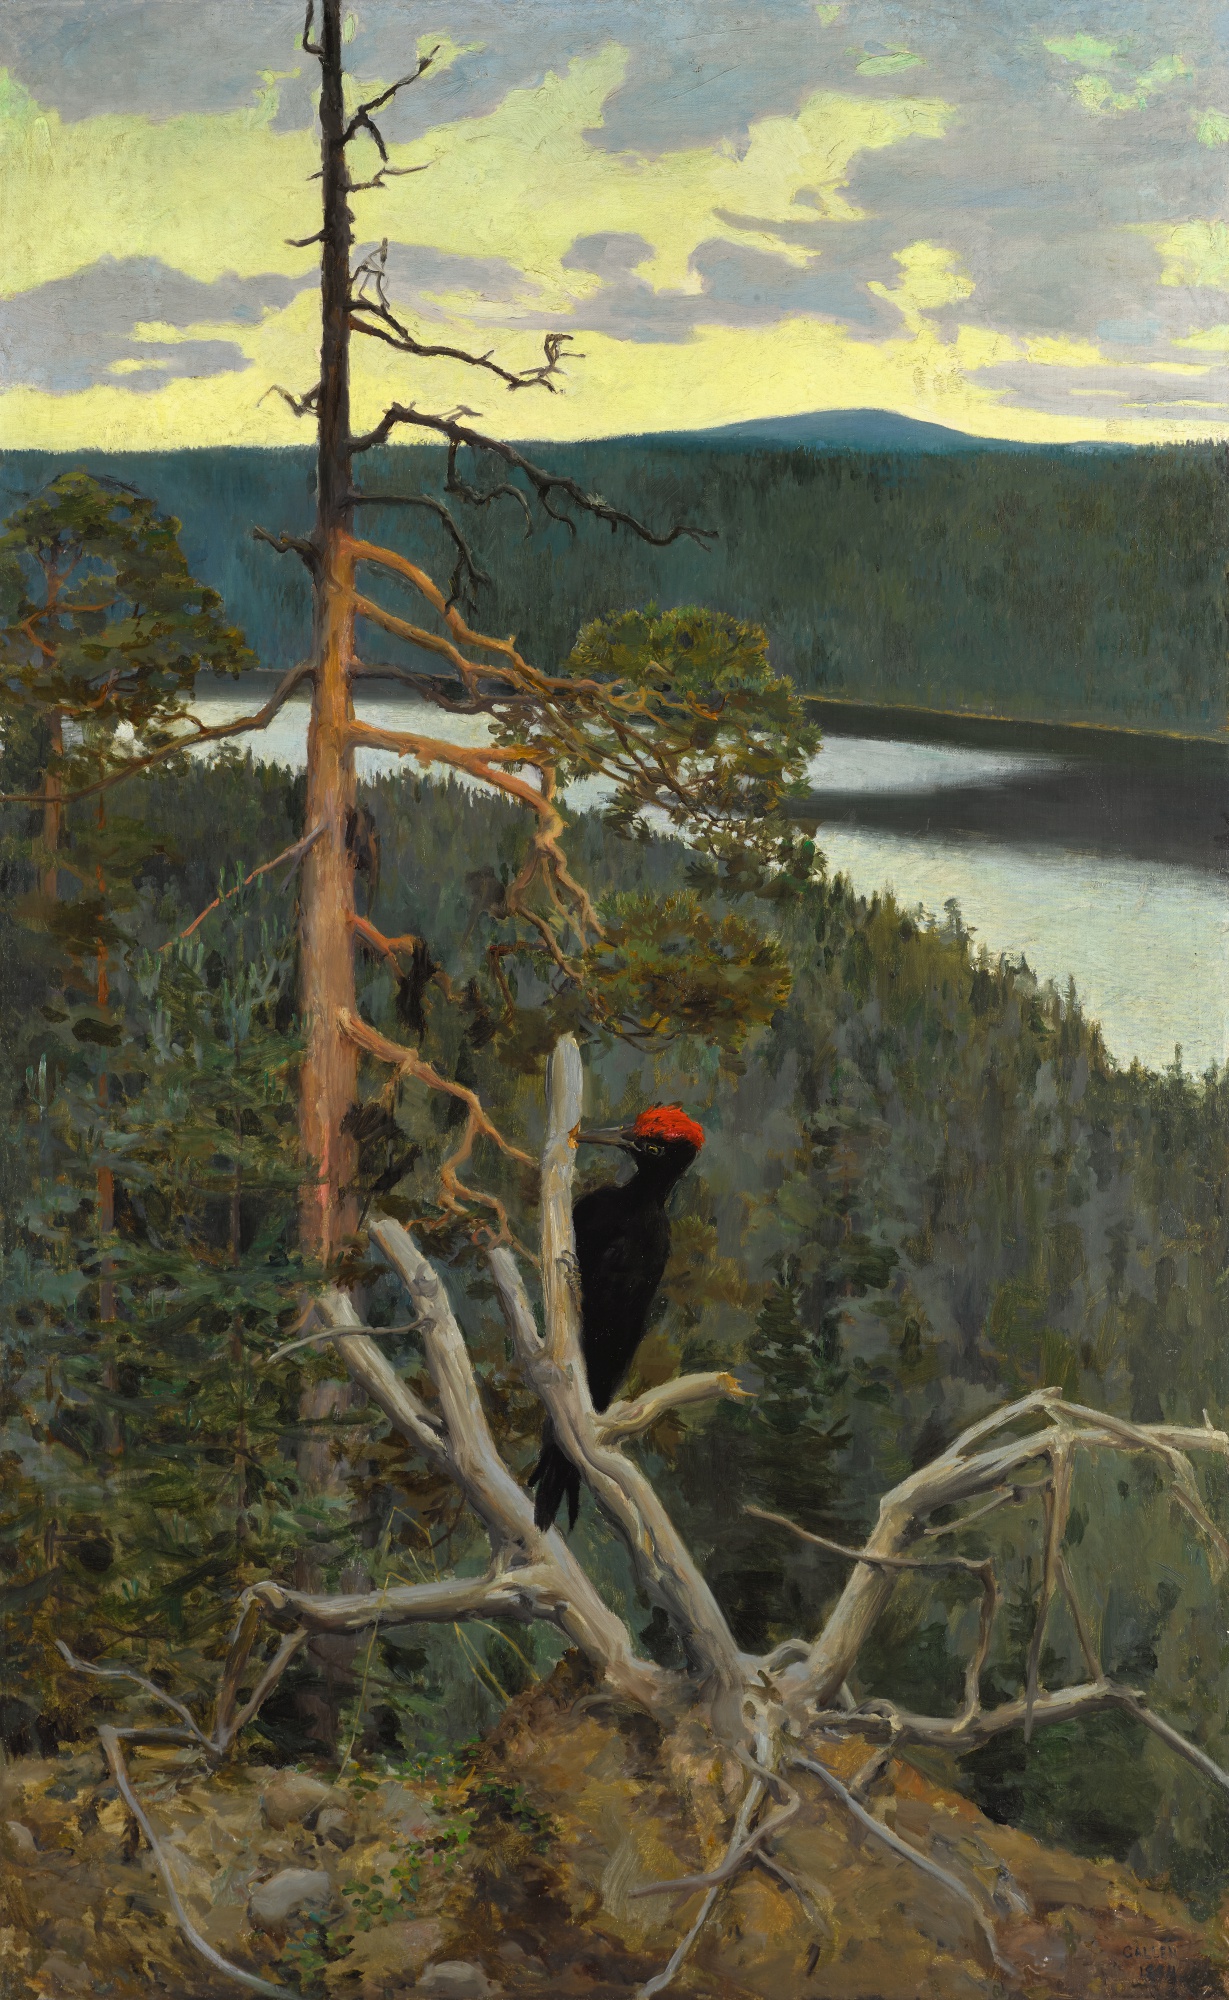 Palokärki (Чёрный дятел) by Аксели Вальдемар Галлен-Каллела - 1894 - 145 x 91 см 